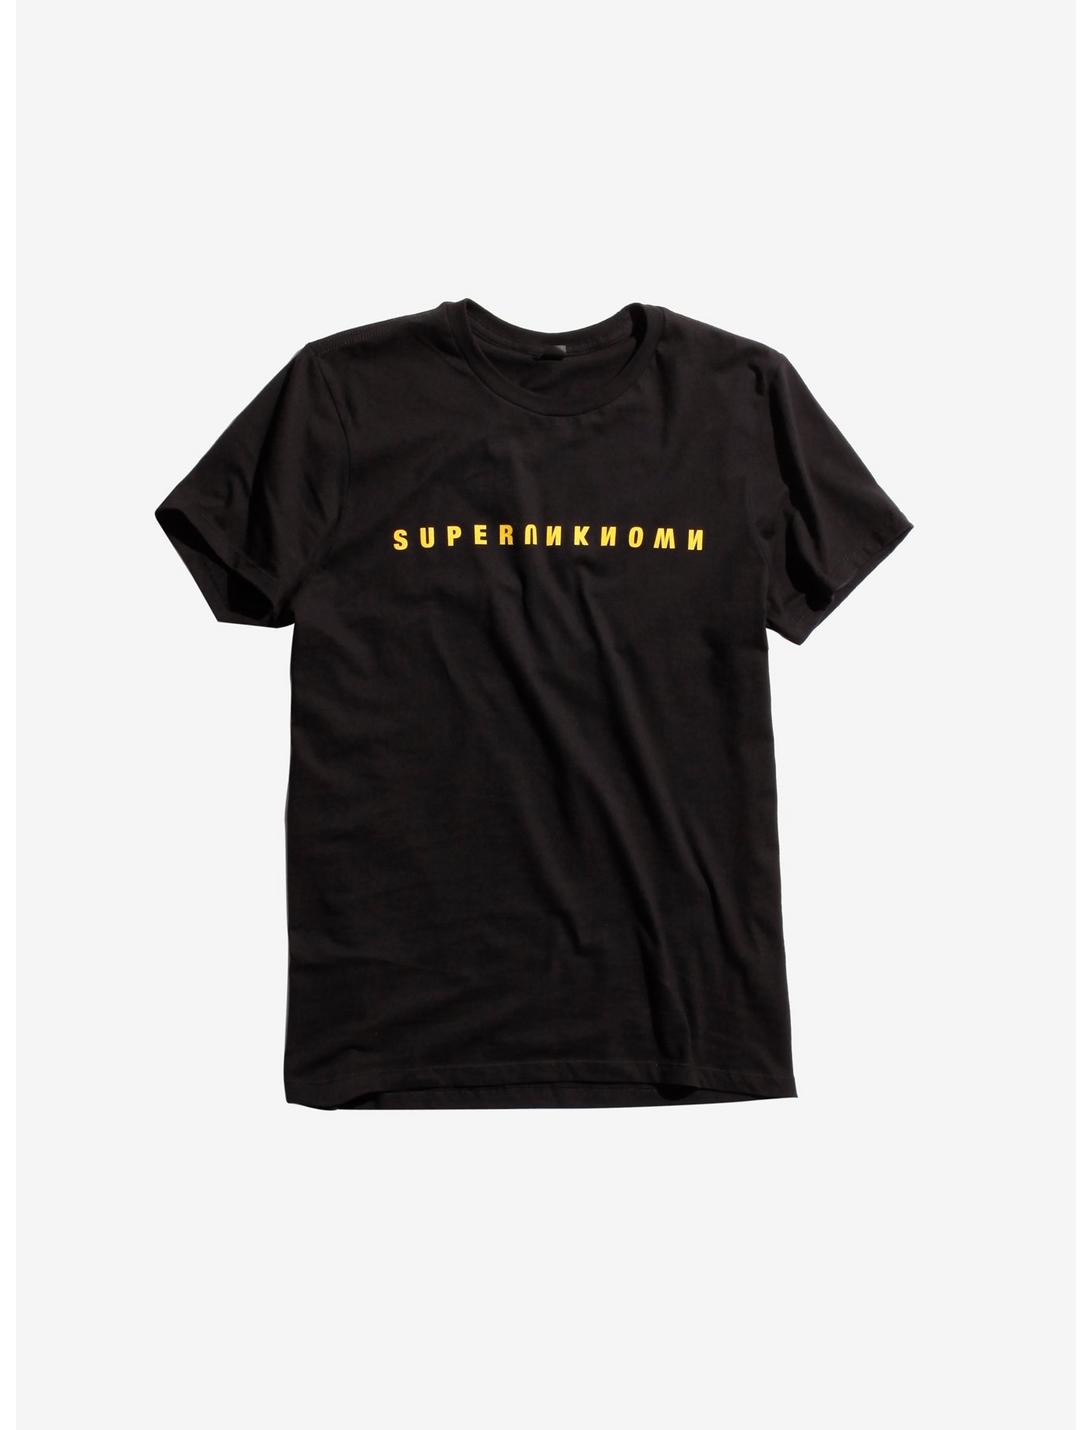 Soundgarden Superunknown Japan T-Shirt, BLACK, hi-res